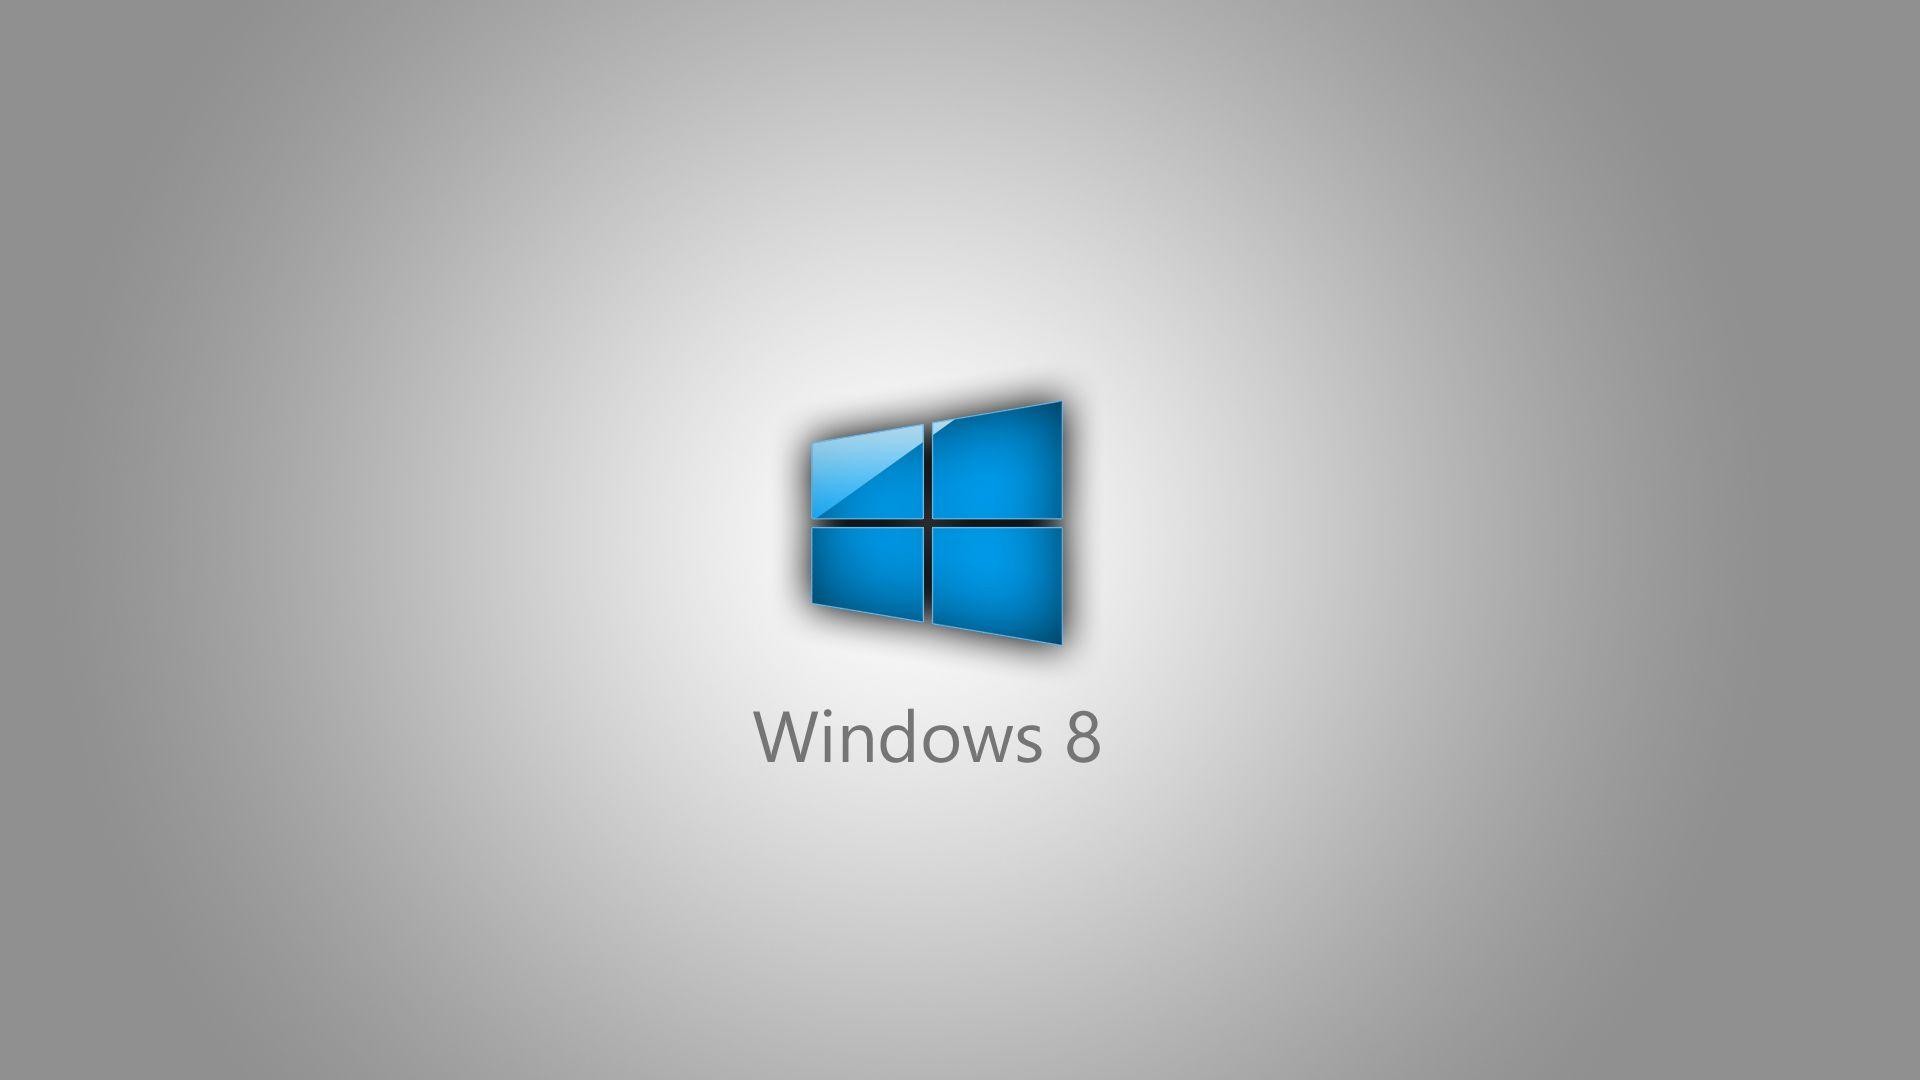 Windows 8 Wallpaper 1080p 74 Pictures